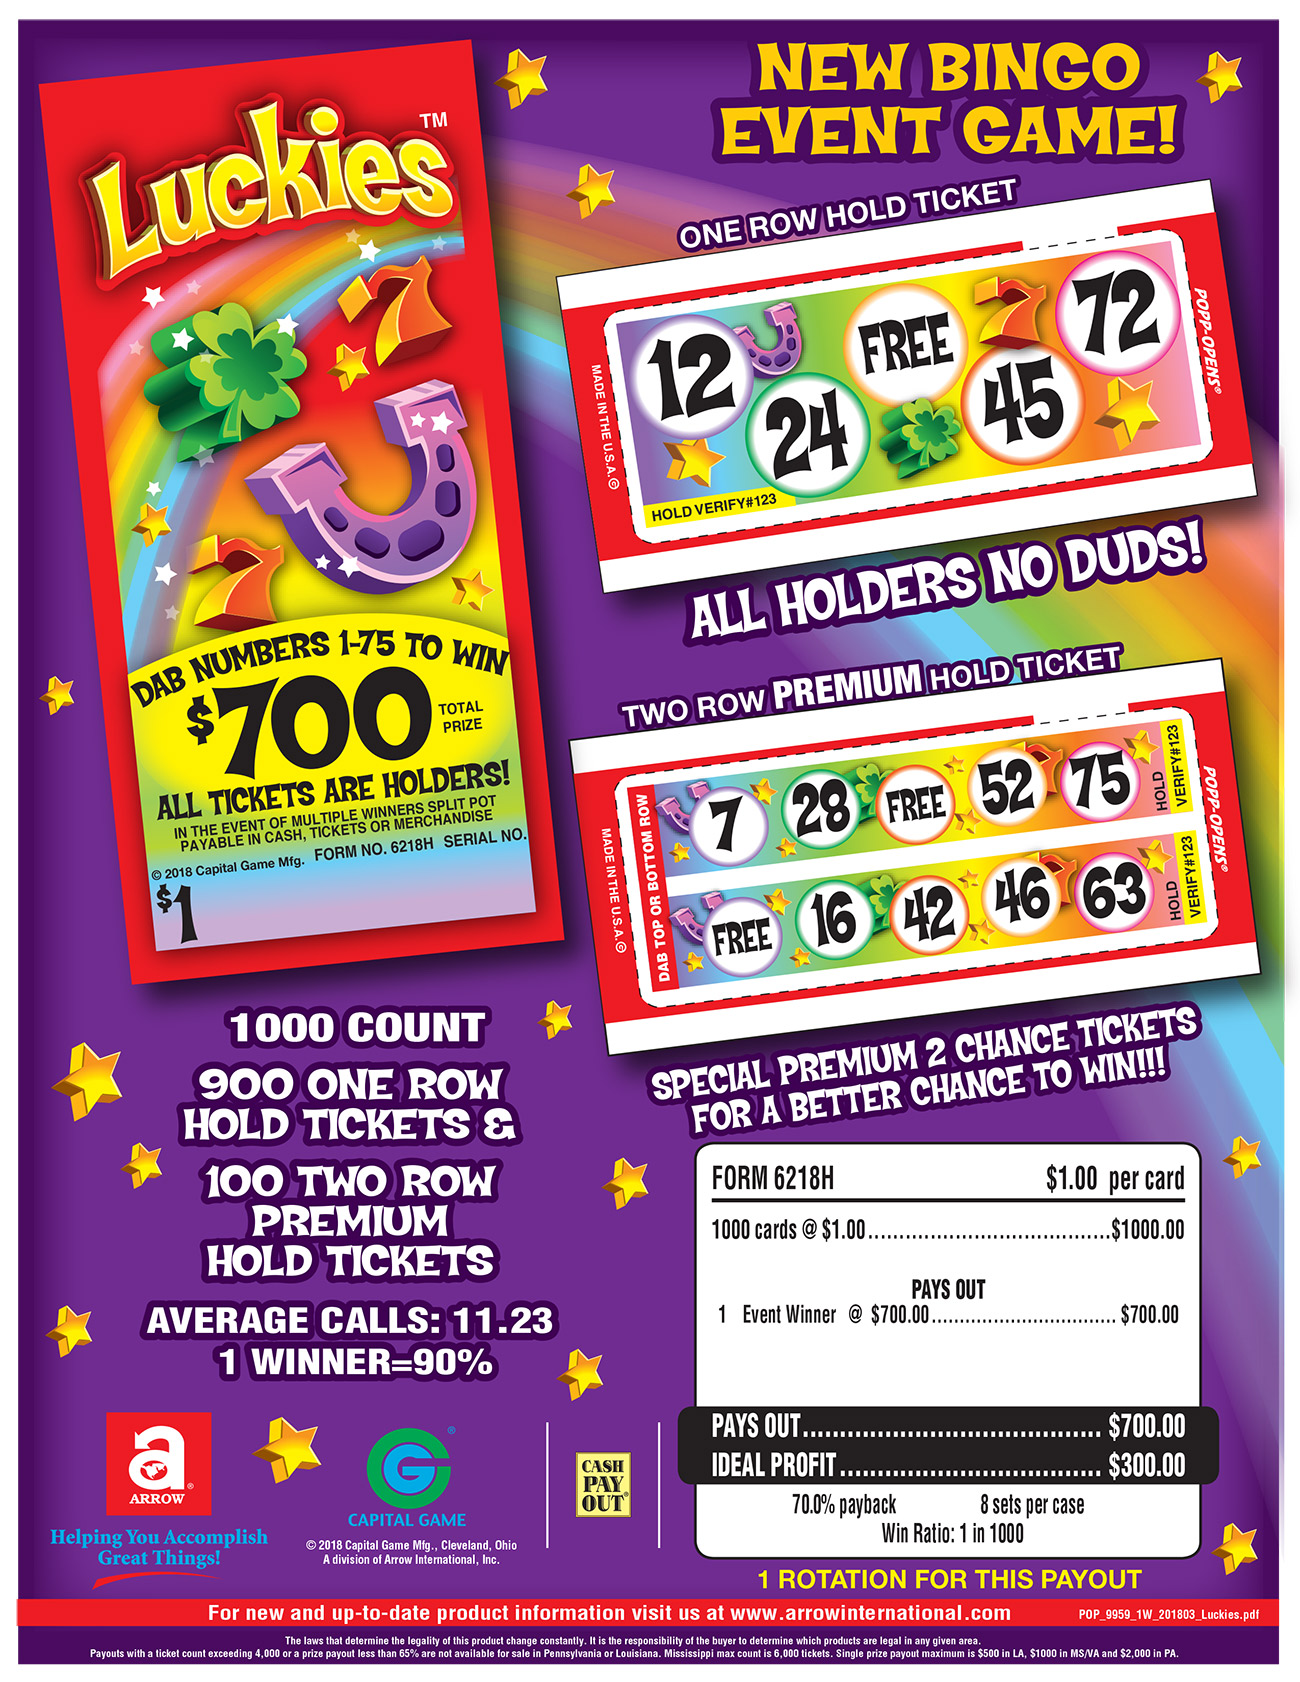 1 Bag of Snack Pack $100 Bingo Pull Tabs Game Seal Card